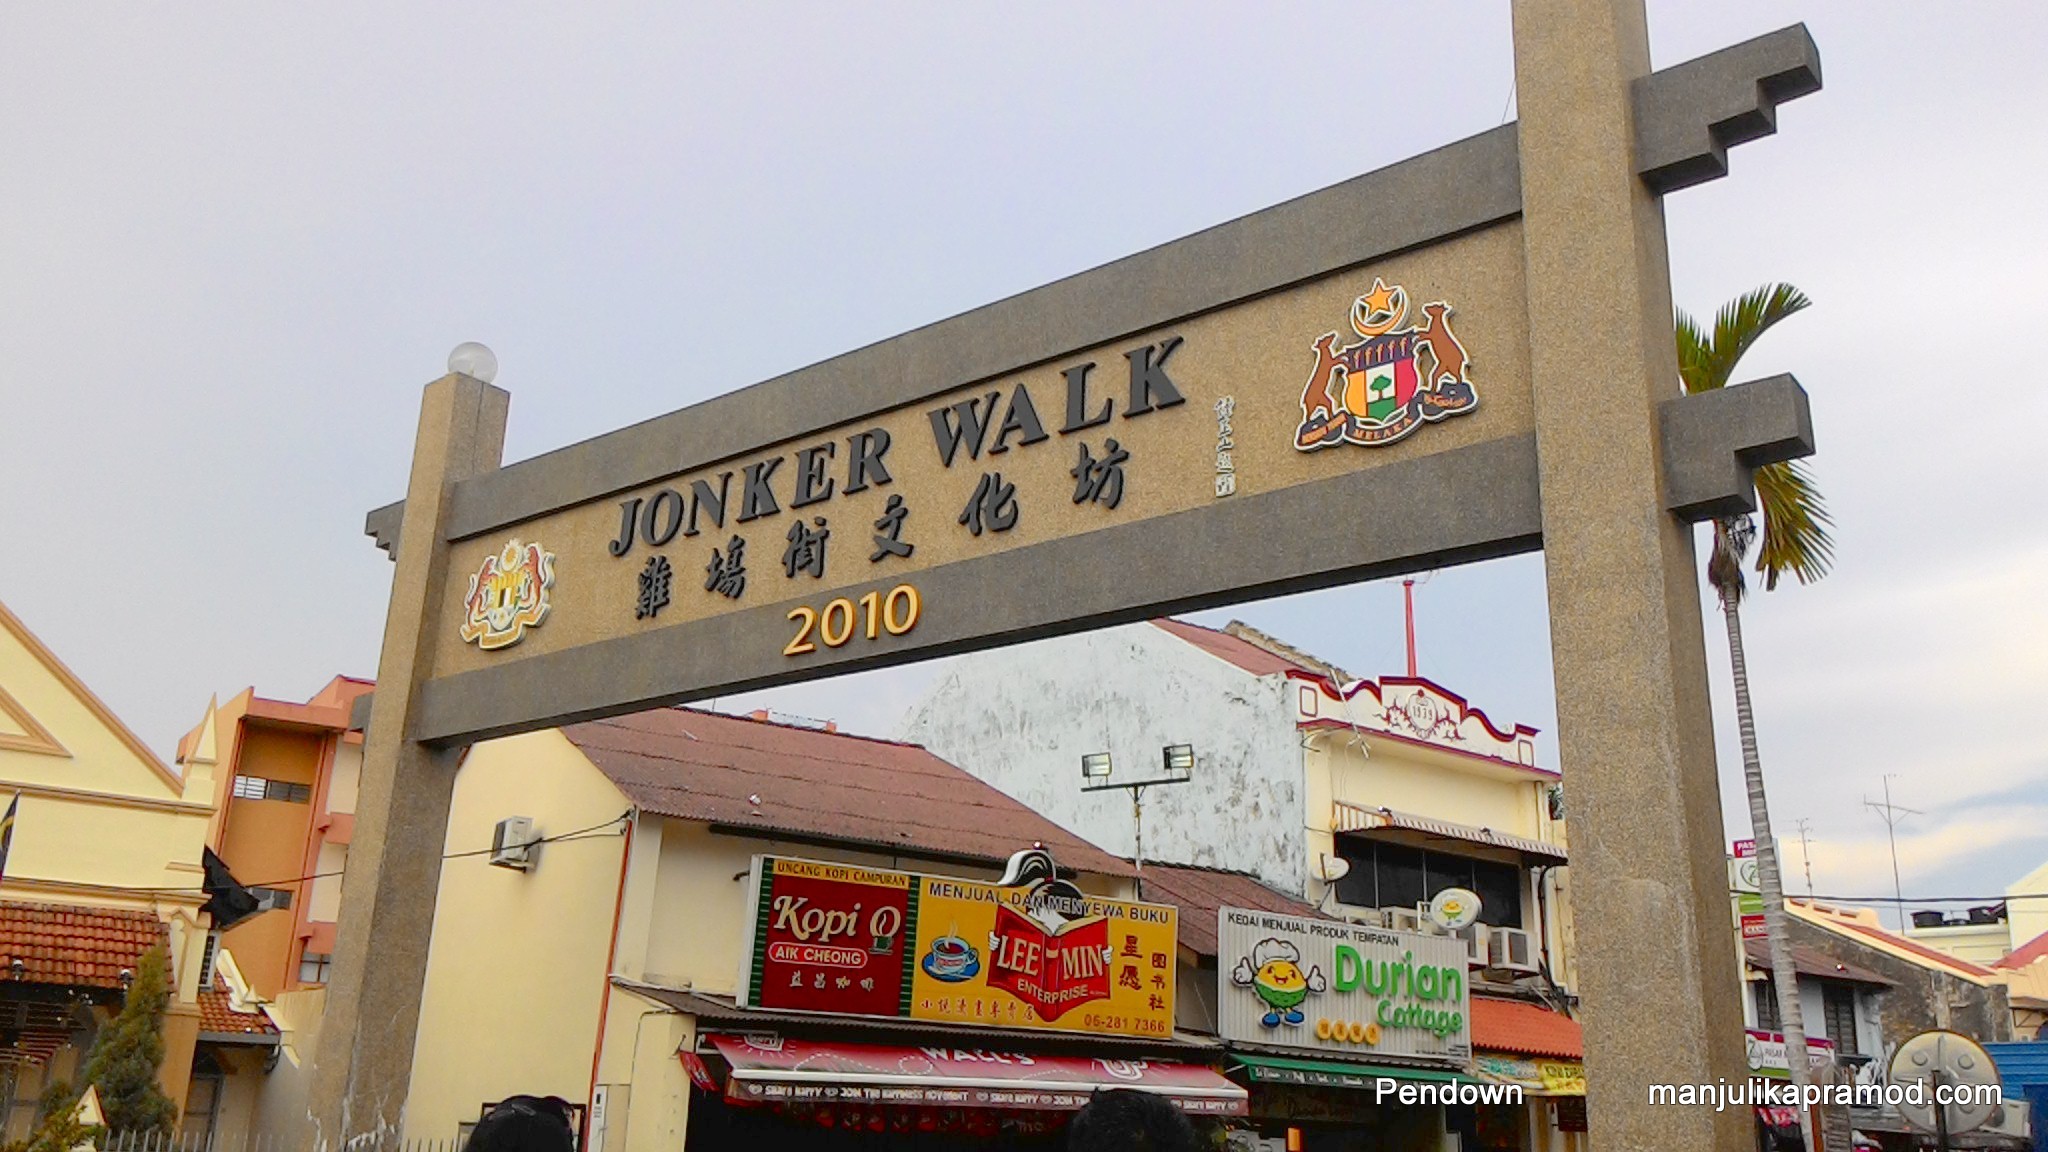 The mixed cultural flavor of Jonker Walk in Melaka